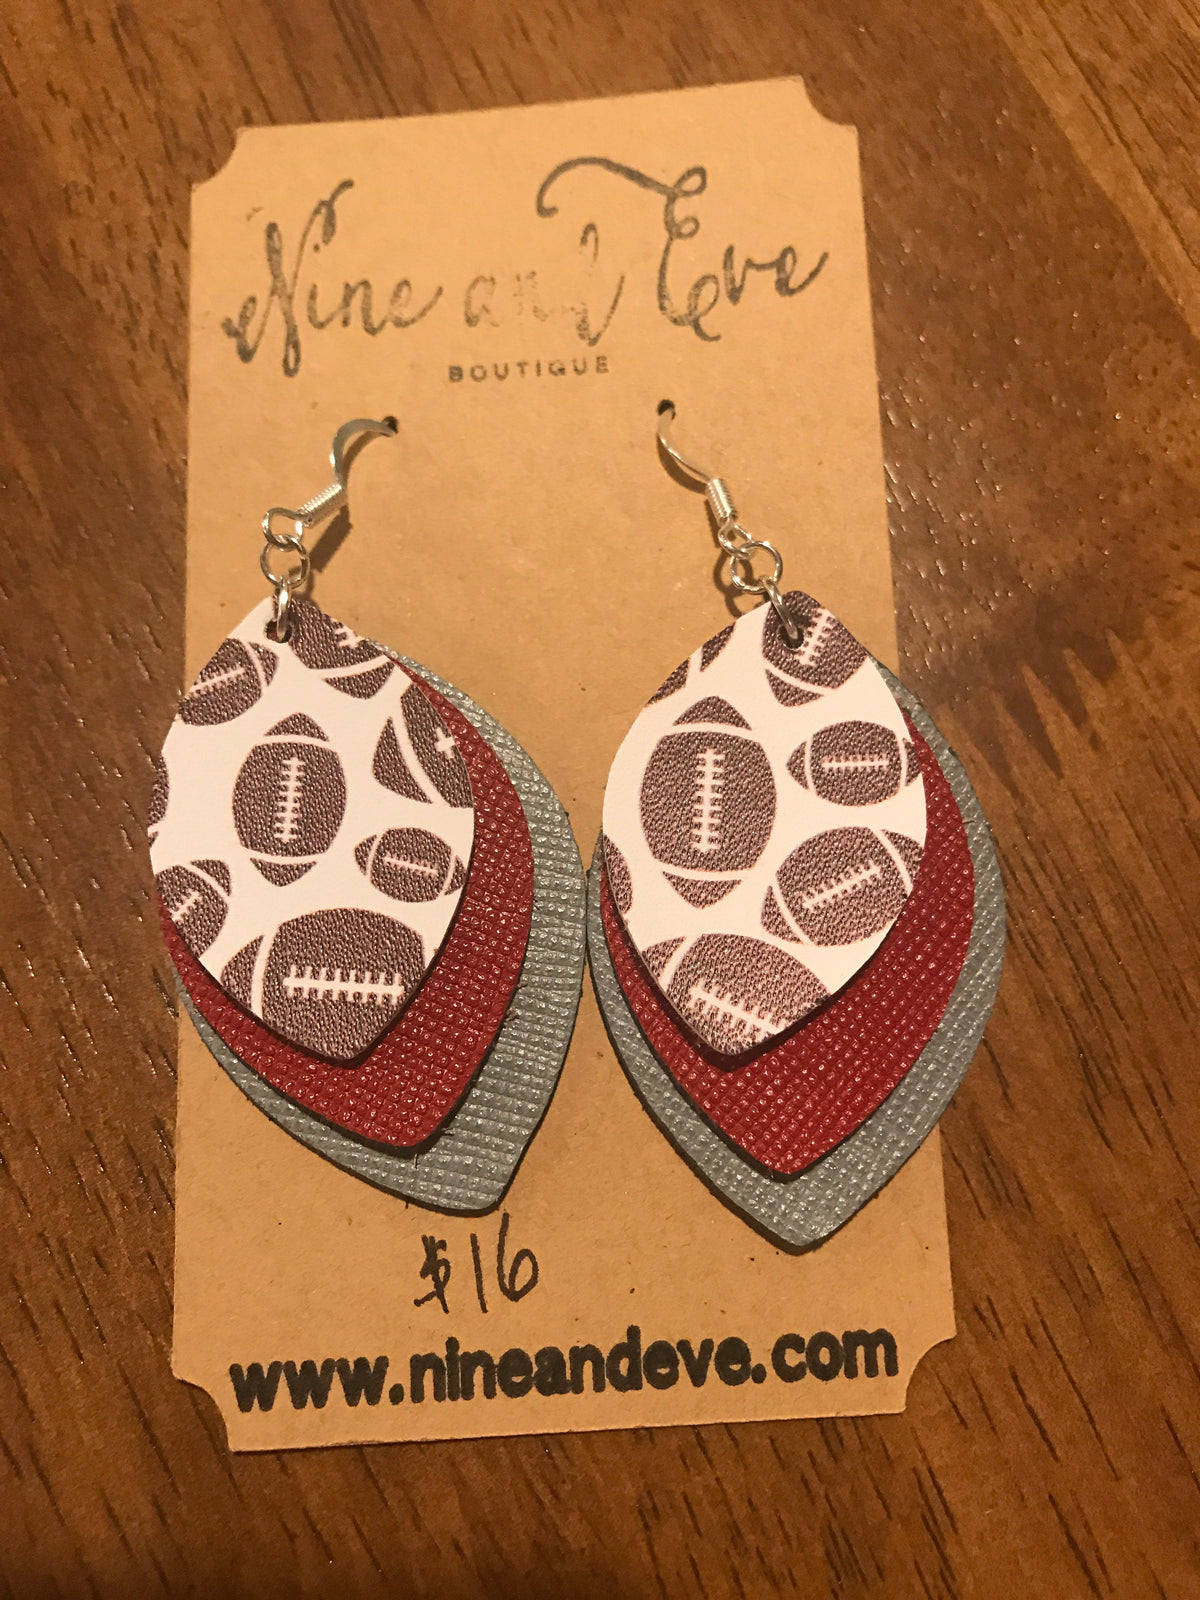 Nine and Eve Ohio State football earrings